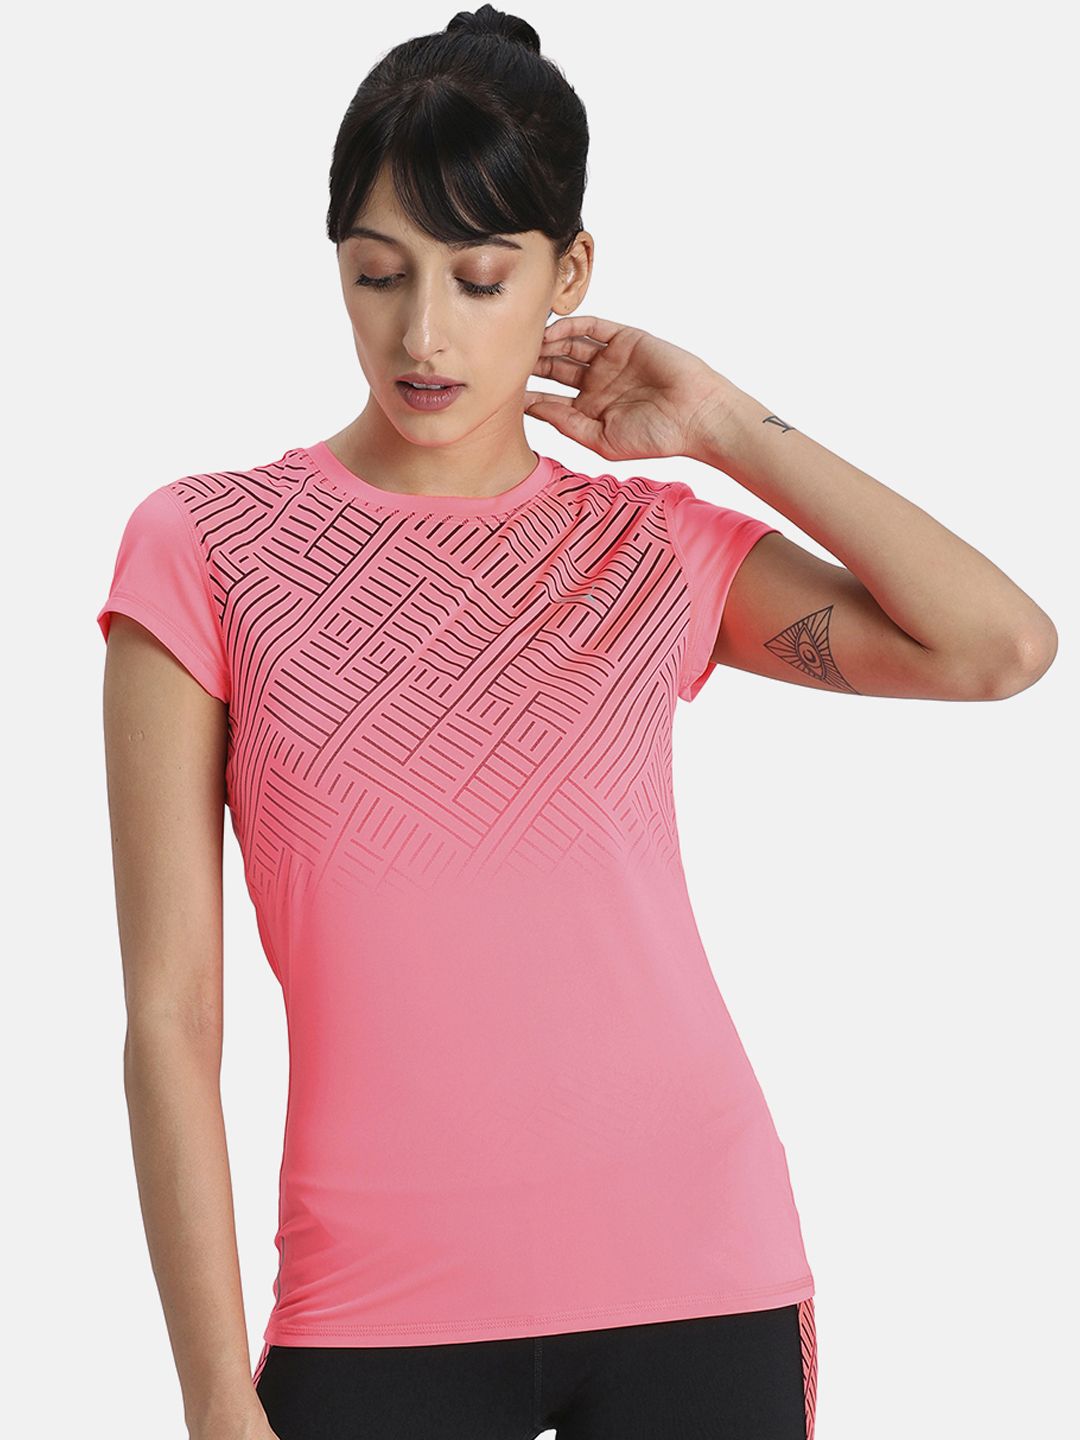 Puma Women Pink Printed Round Neck T-shirt Price in India